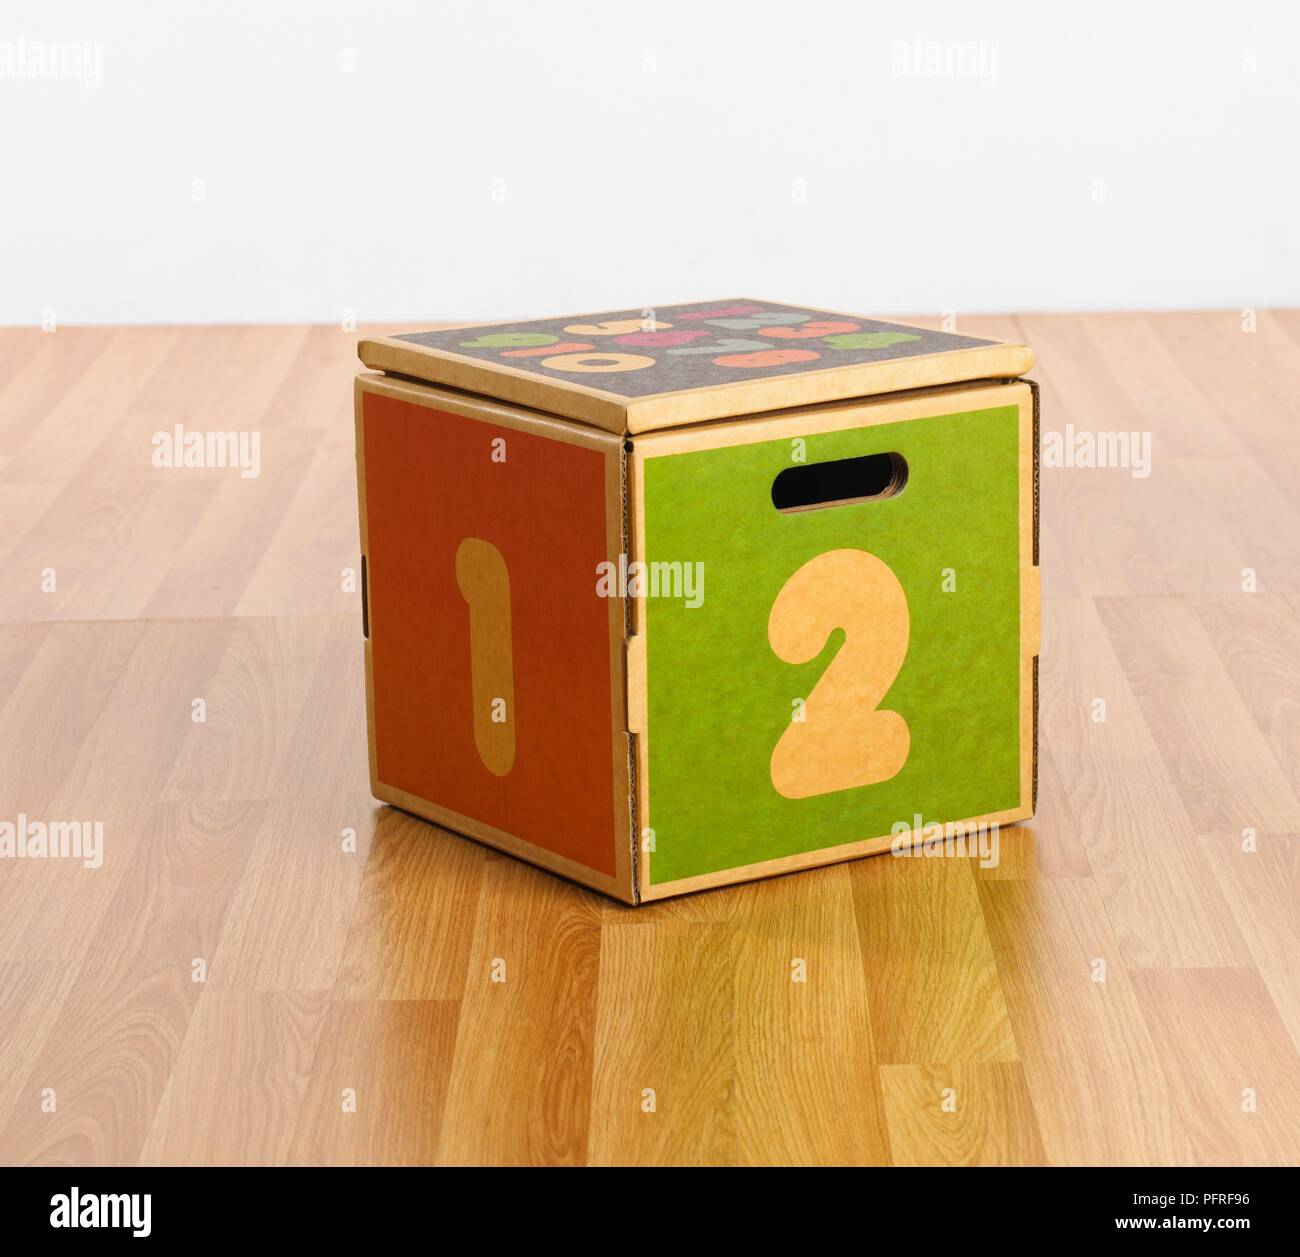 Caja de cartón con números Fotografía de stock - Alamy